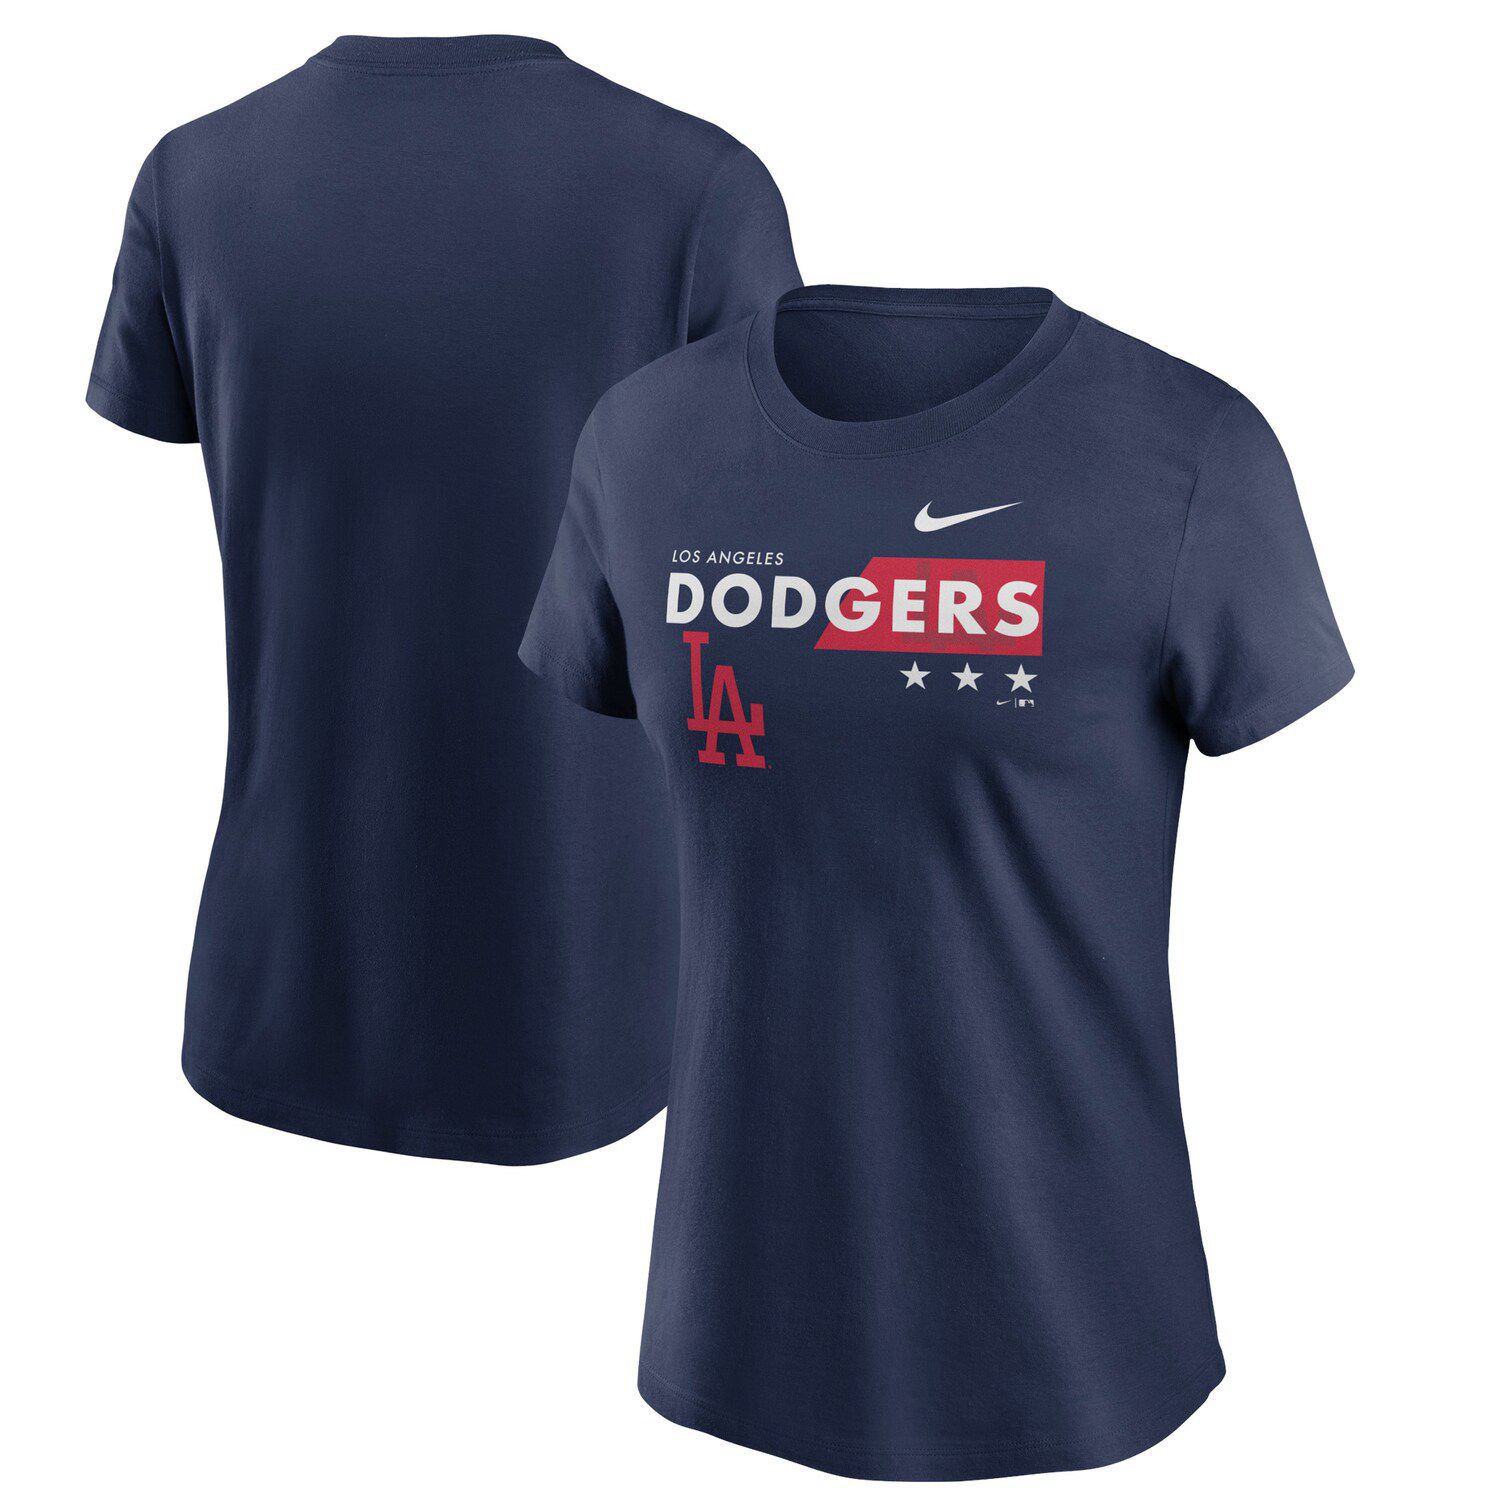 Nike T-Shirt Adult Womens XL Blue Short Sleeve Los Angeles Dodgers